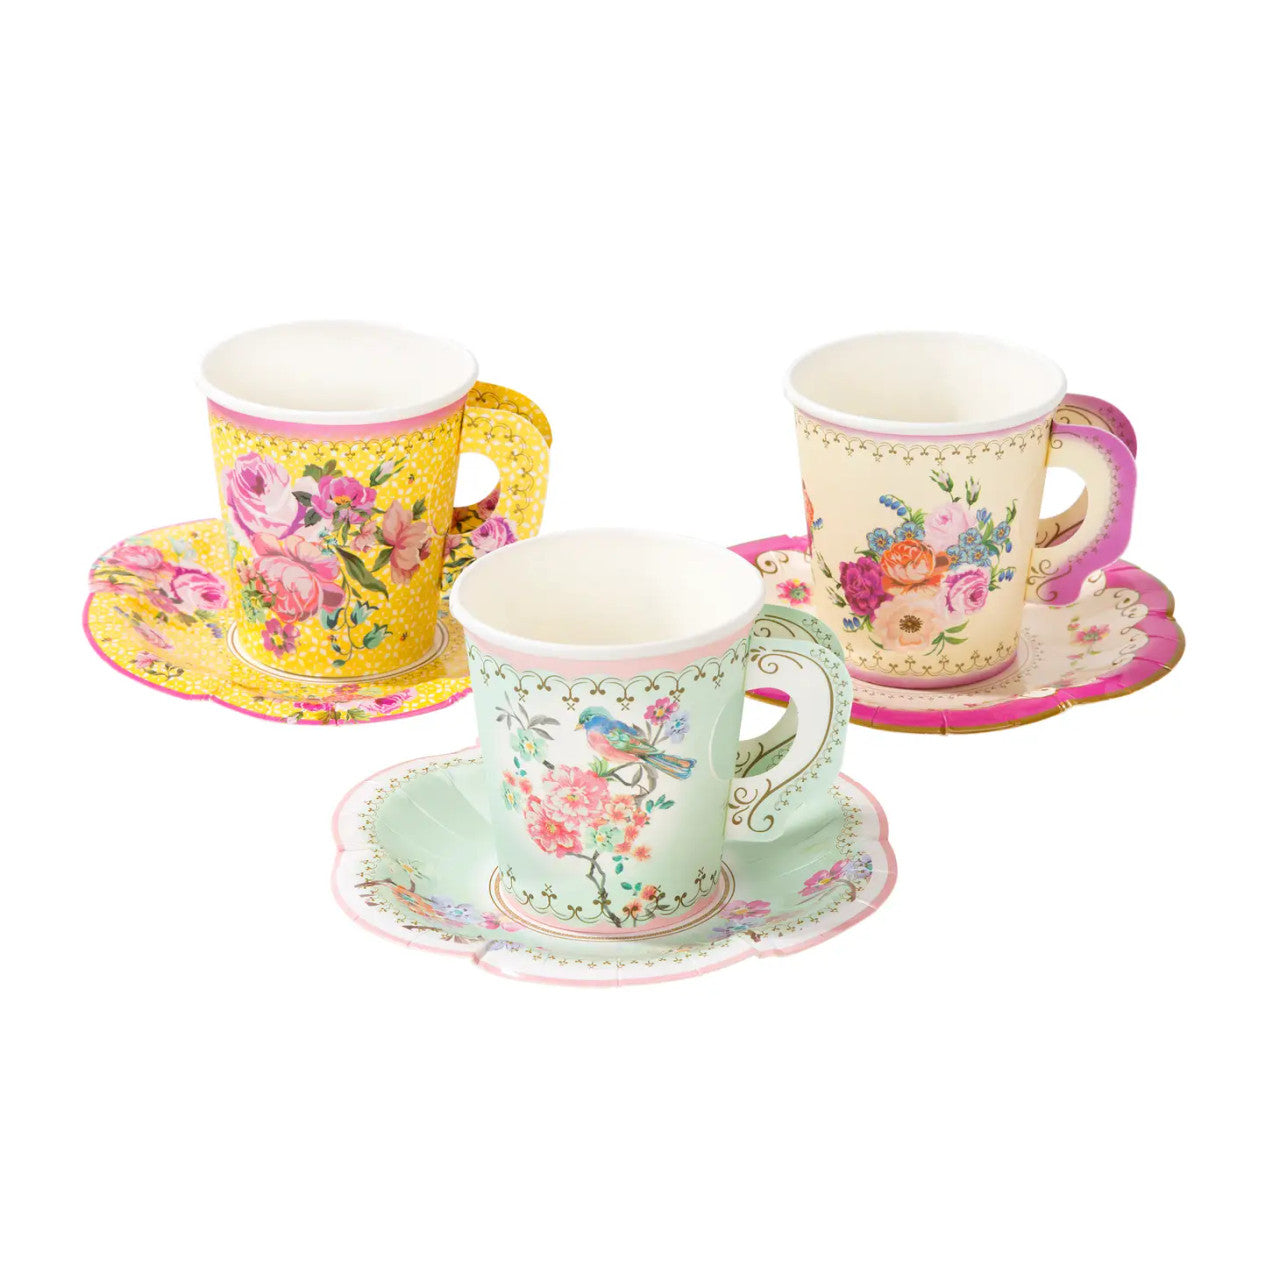 Vintage Paper Teacups and Saucers Set - 12 pack 